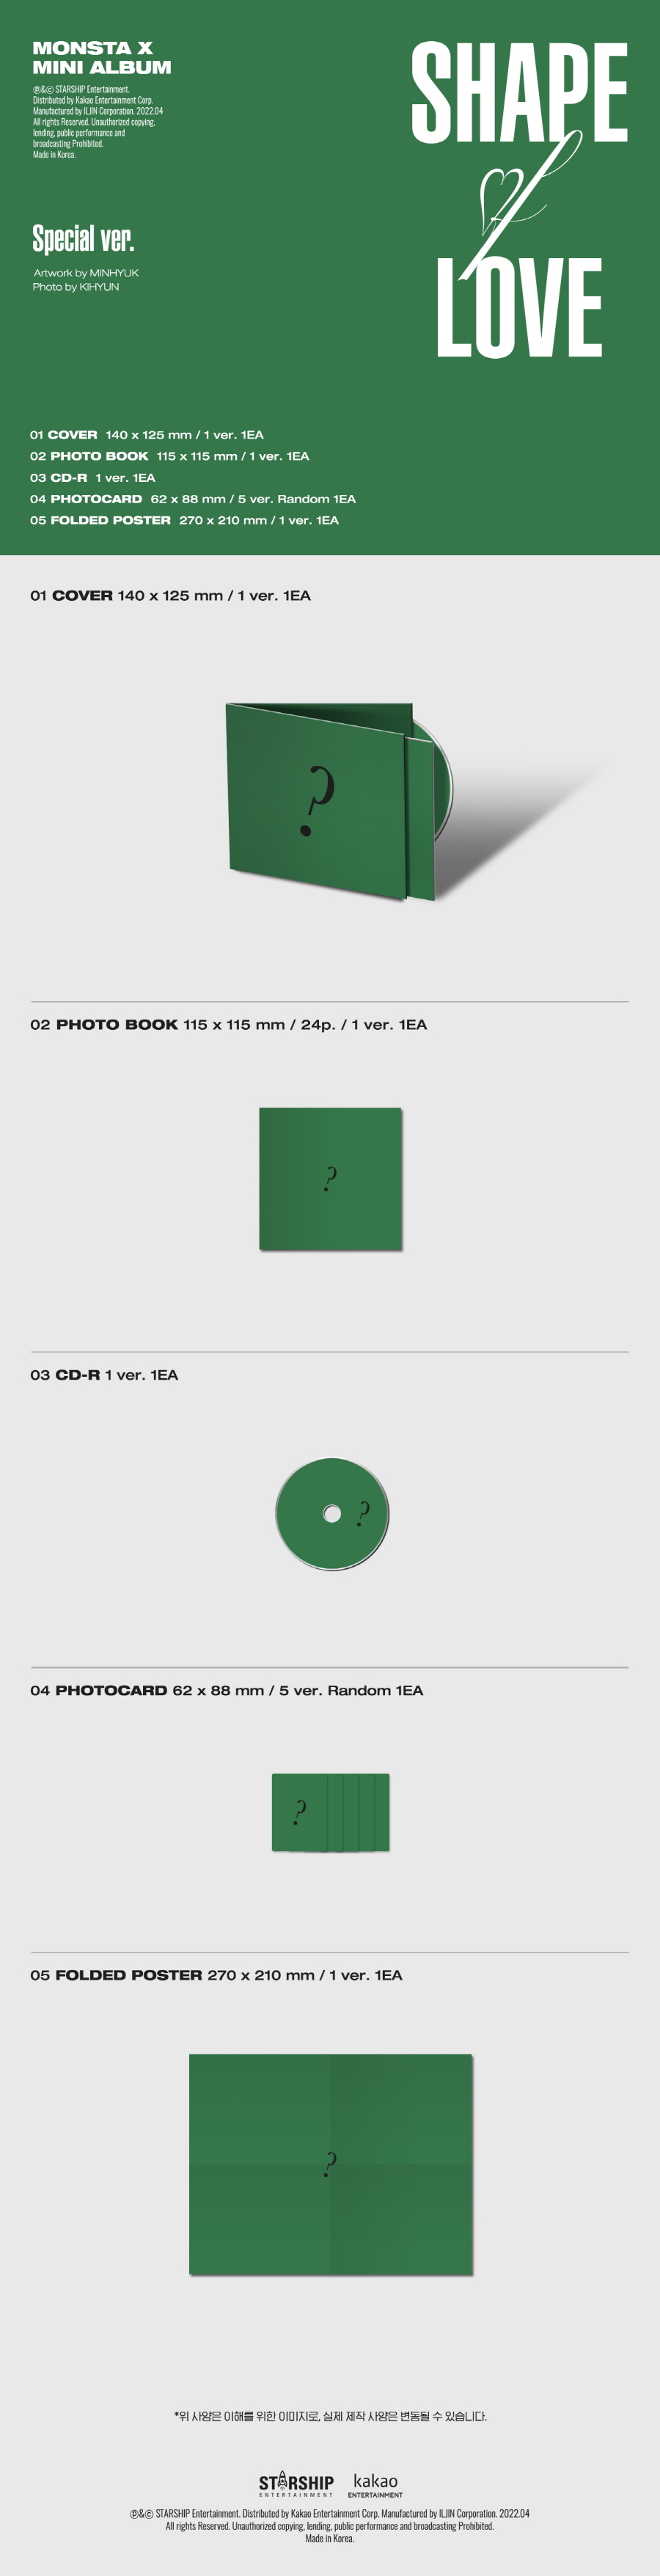 MONSTA X - 11th Mini Album [SHAPE of LOVE] (Special ver.) special album monsta jewel monstax cd monsta-x MONSTAXalbum MONSTAXcd SHAPEofLOVE